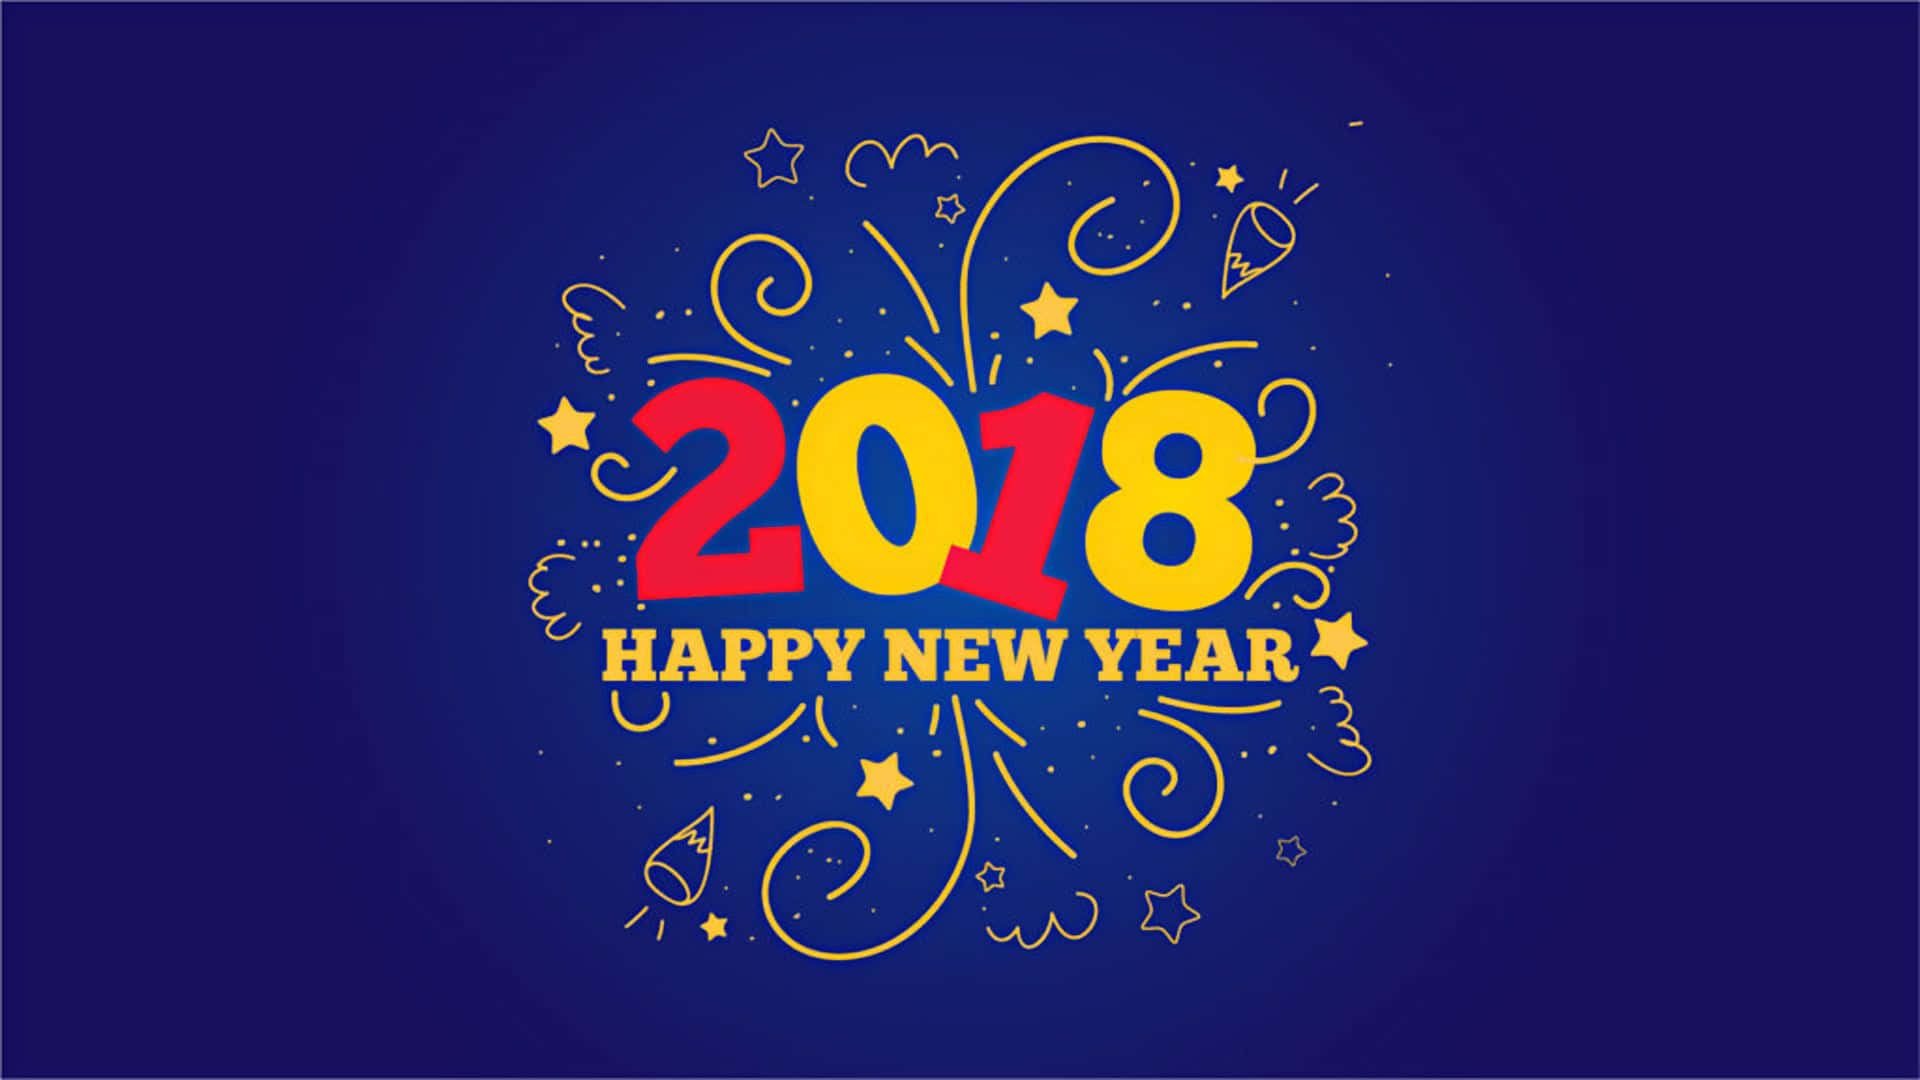 Happy New Year 2018 